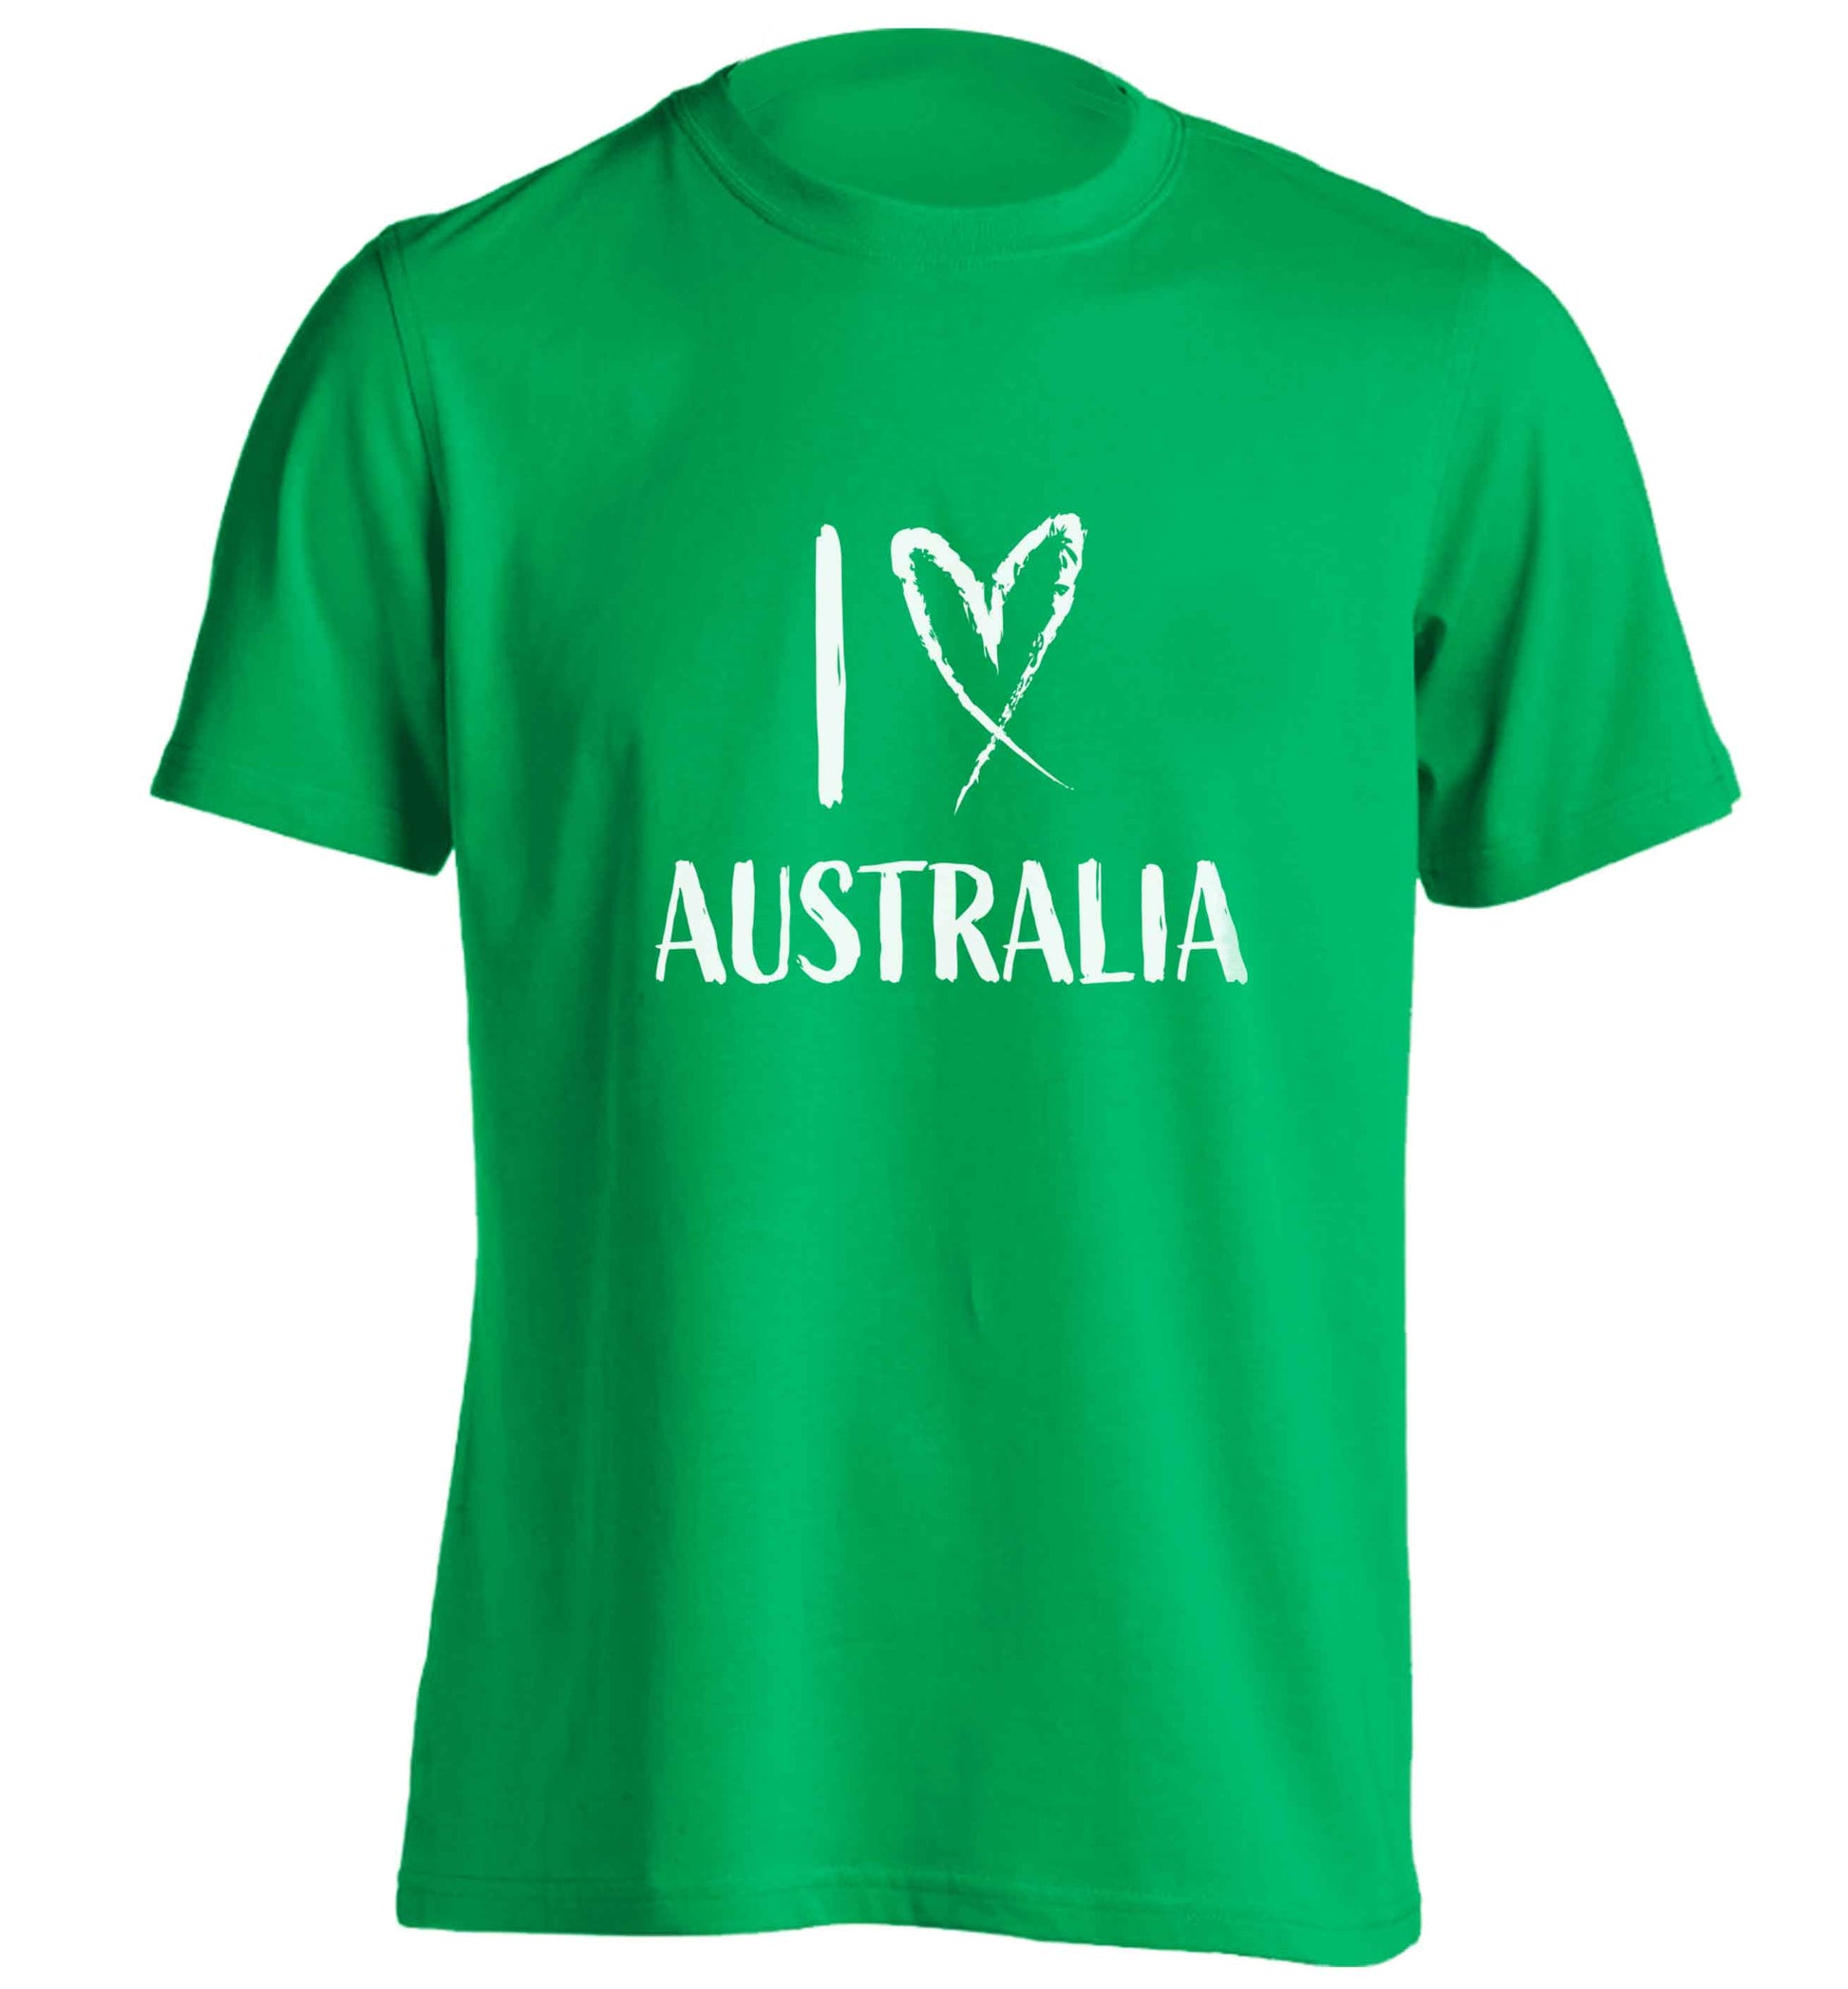 I Love Australia adults unisex green Tshirt 2XL